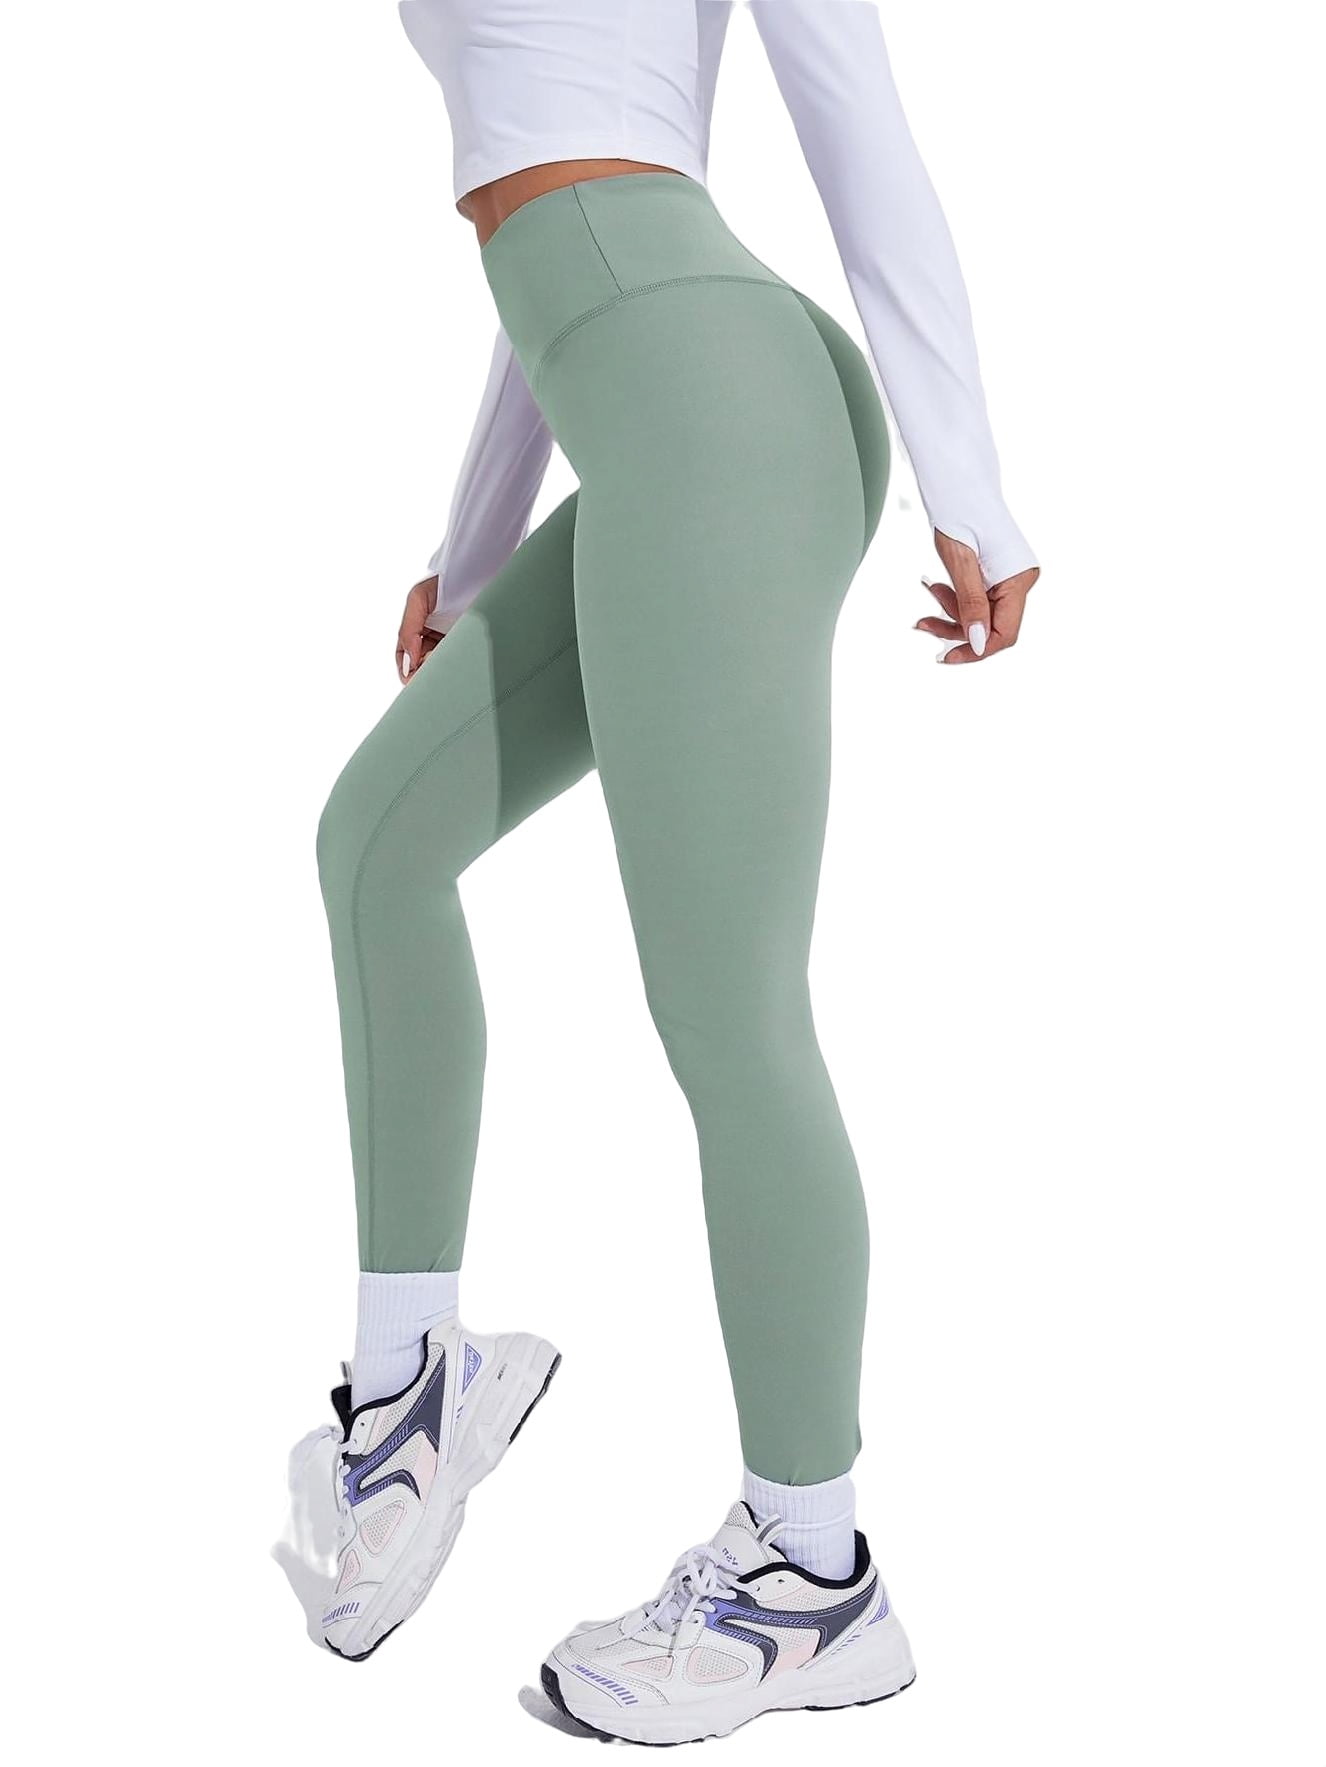 Mint Green Active Bottoms Women's Sports Leggings (Women's